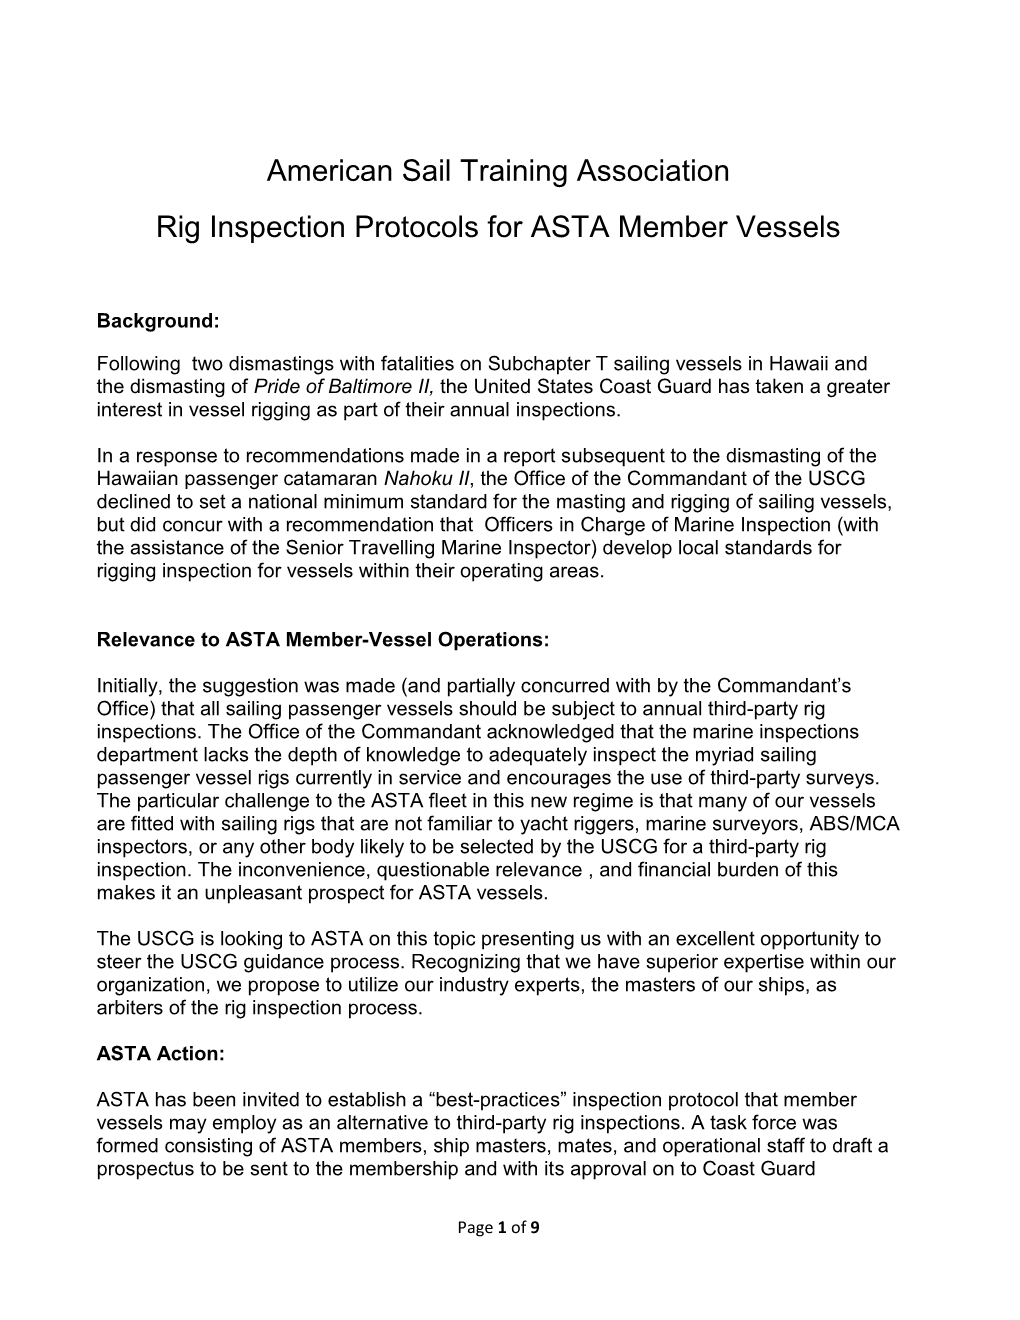 Rig Inspection Protocols for ASTA Member Vessels